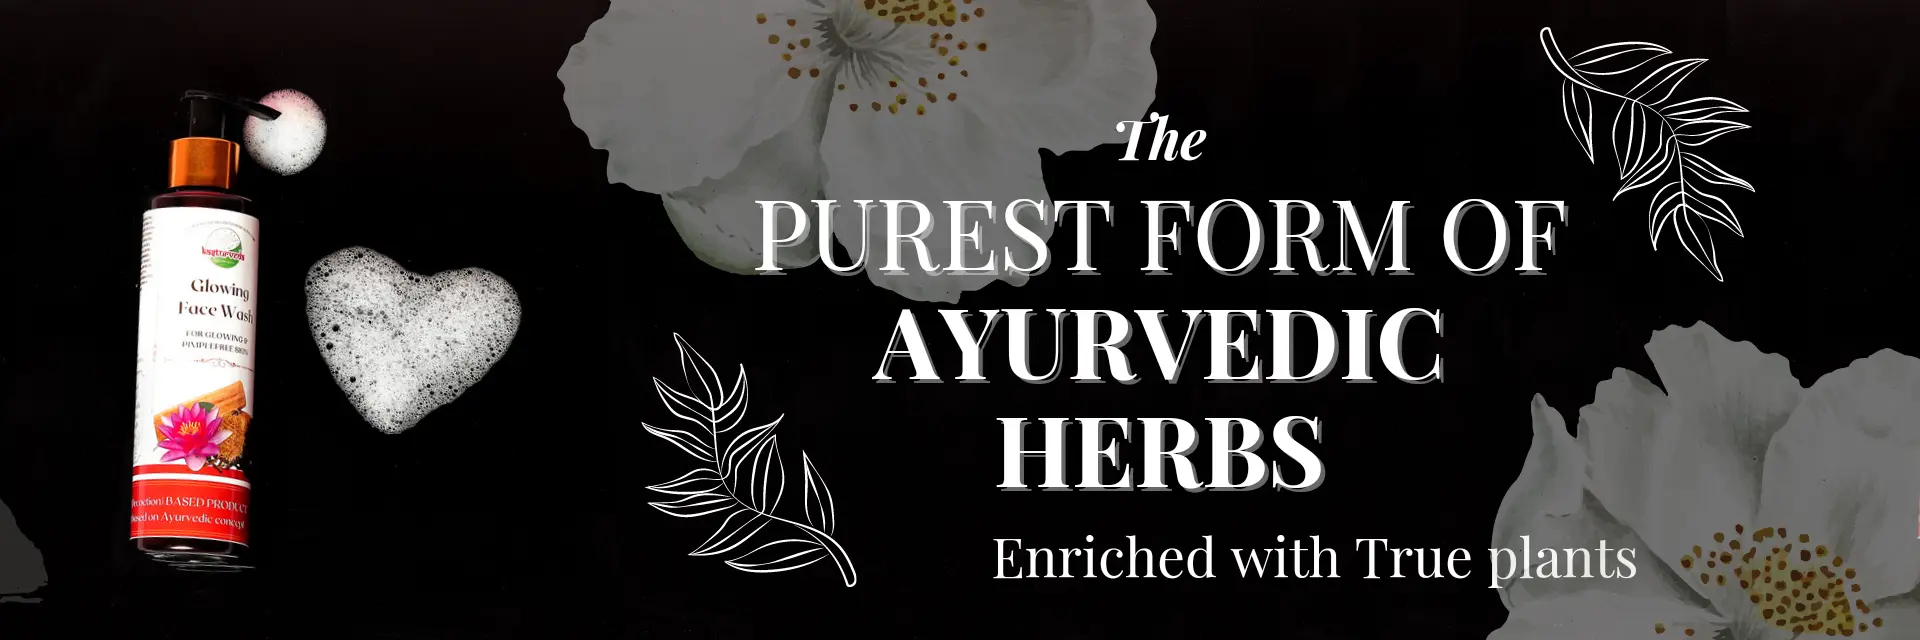 purest form of ayurvedic herbs